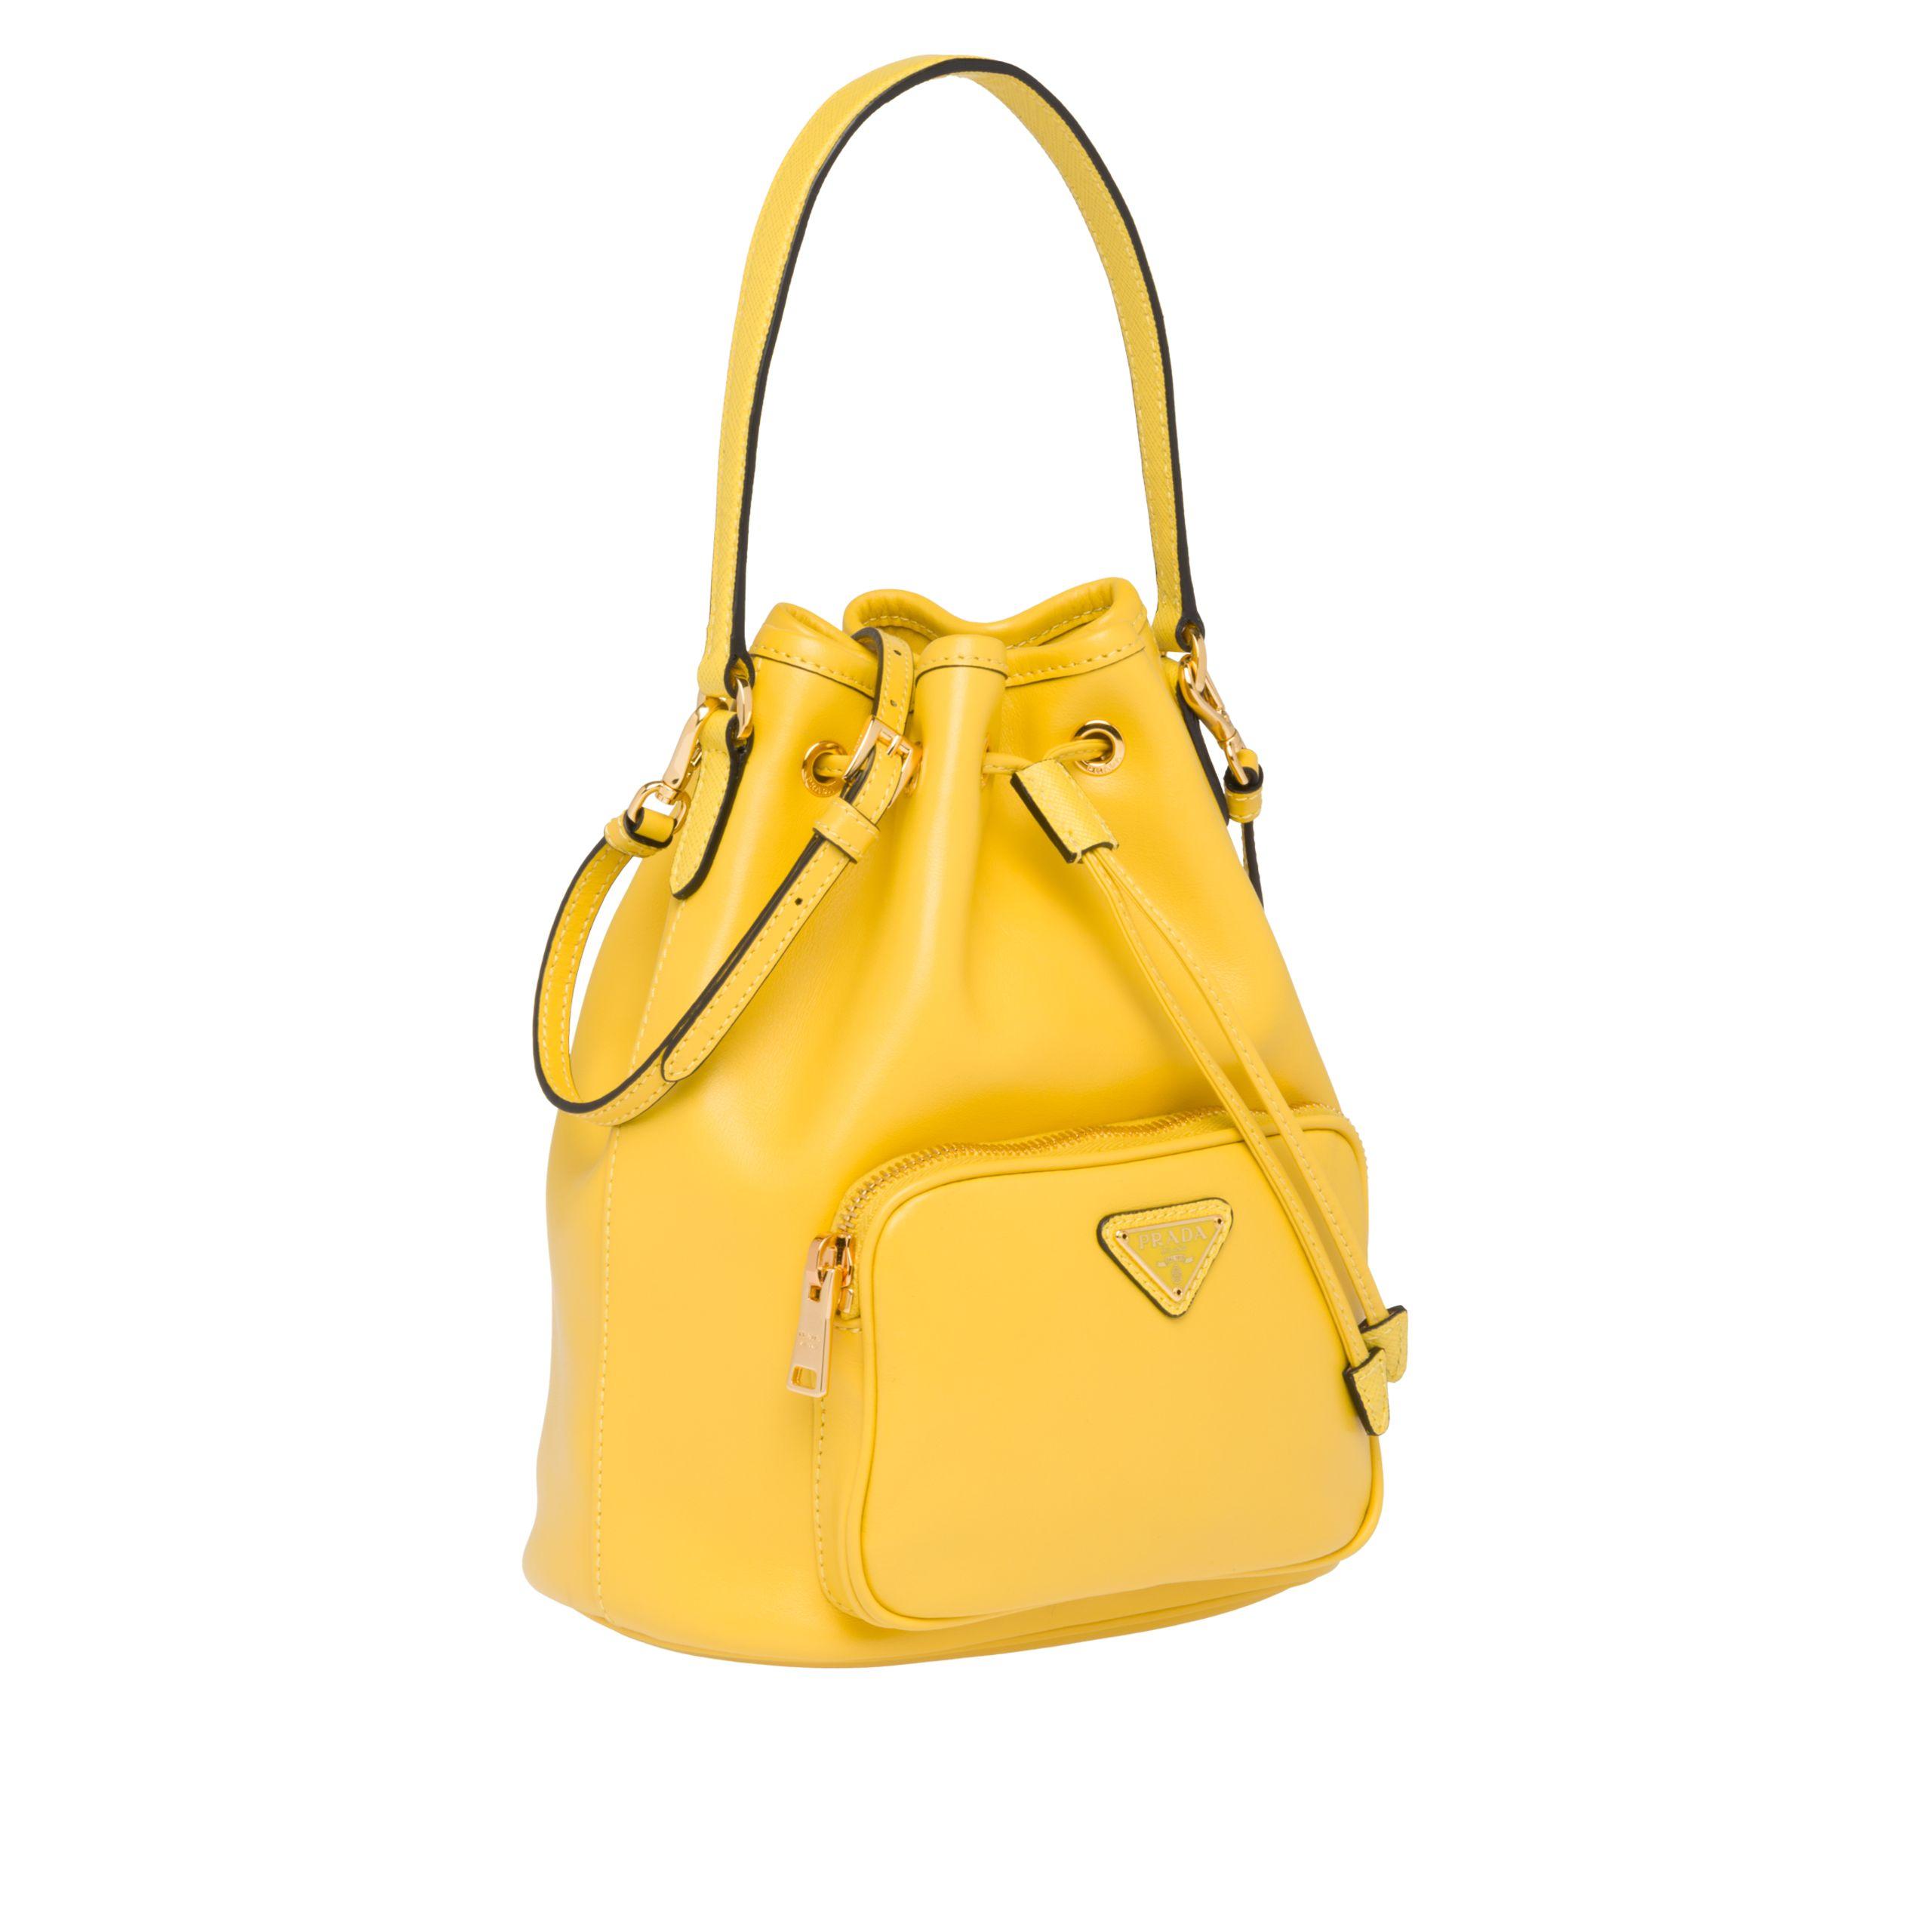 Prada Duet Leather Shoulder Bag in Yellow | Lyst